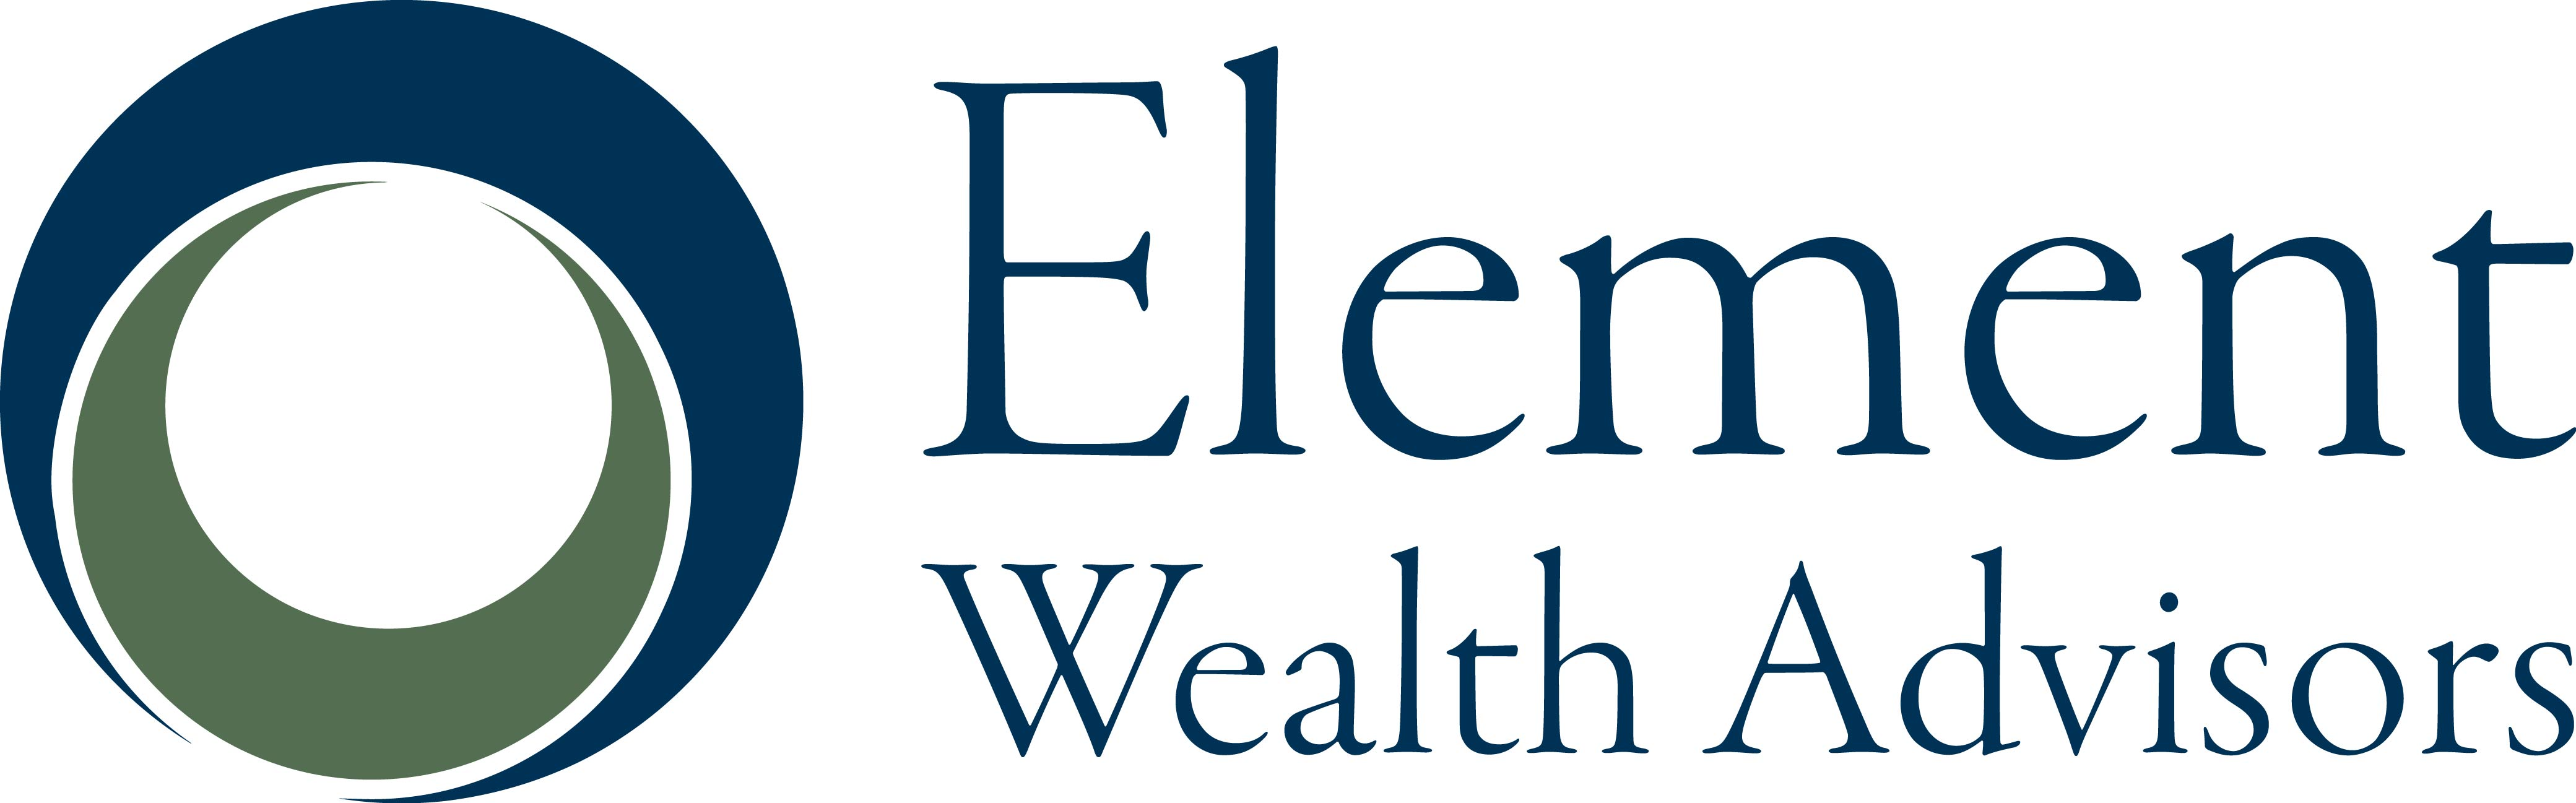 Element Wealth Advisors